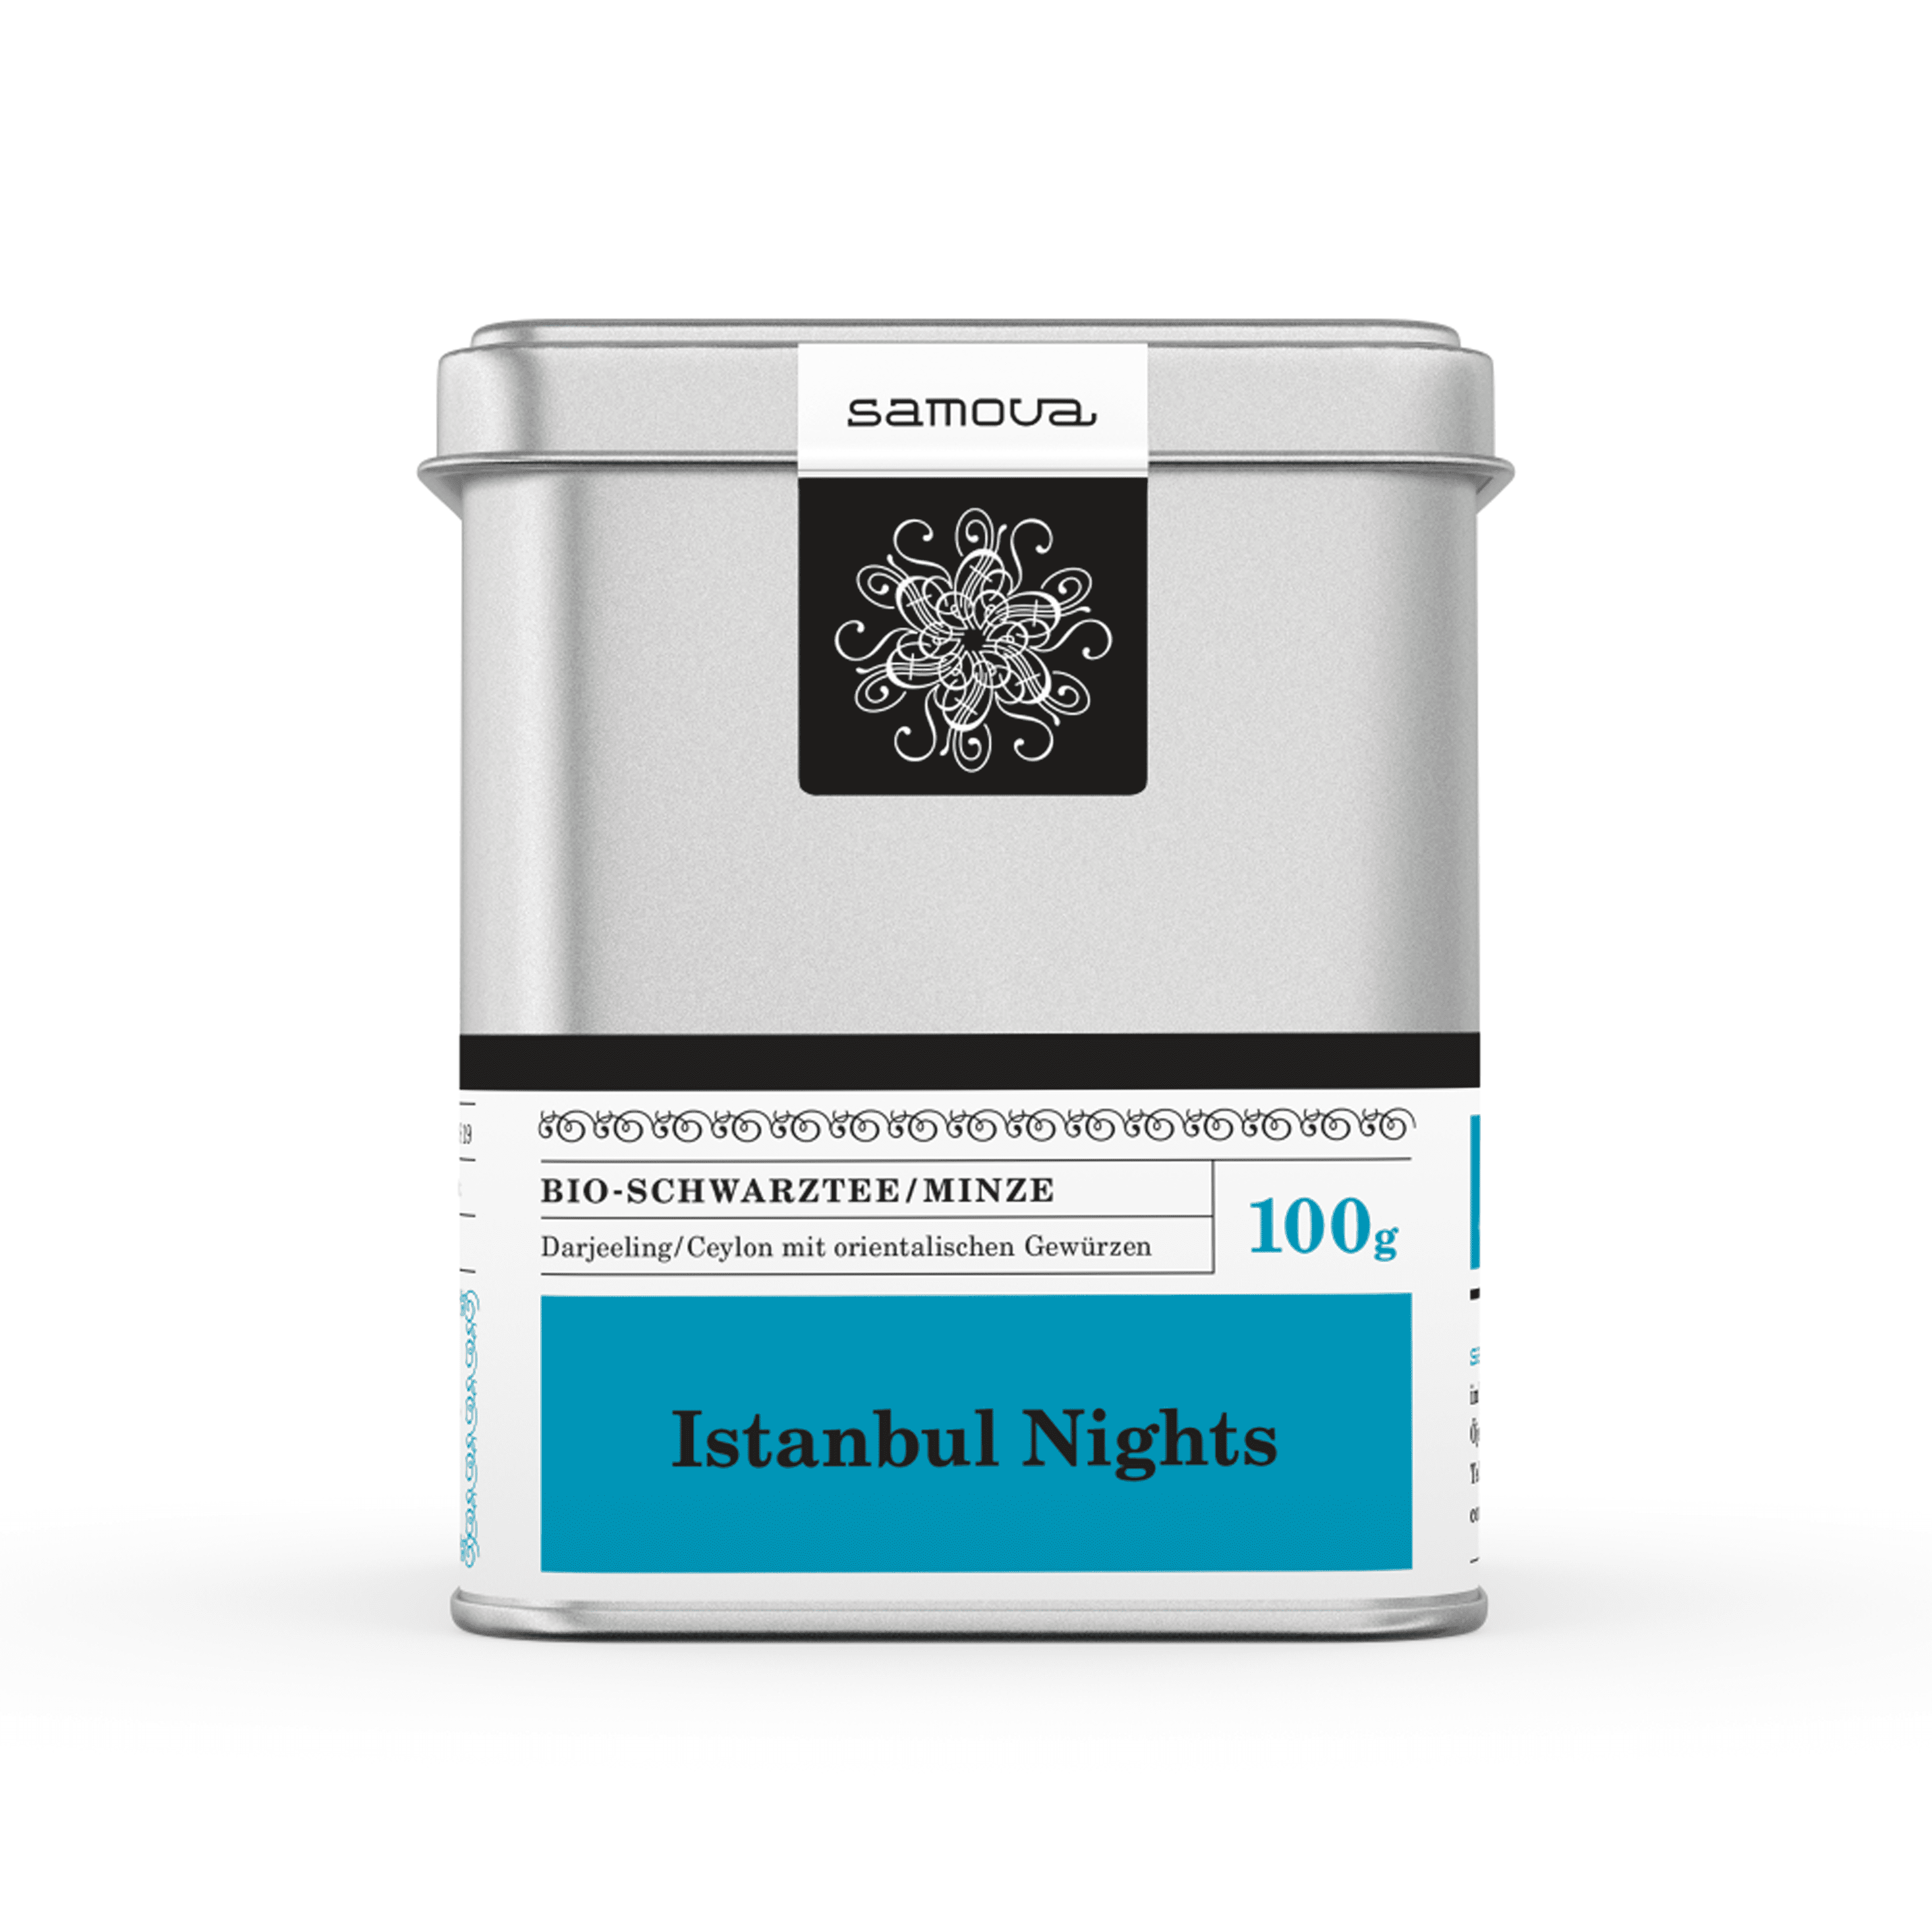 Can of Istanbul Nights tea